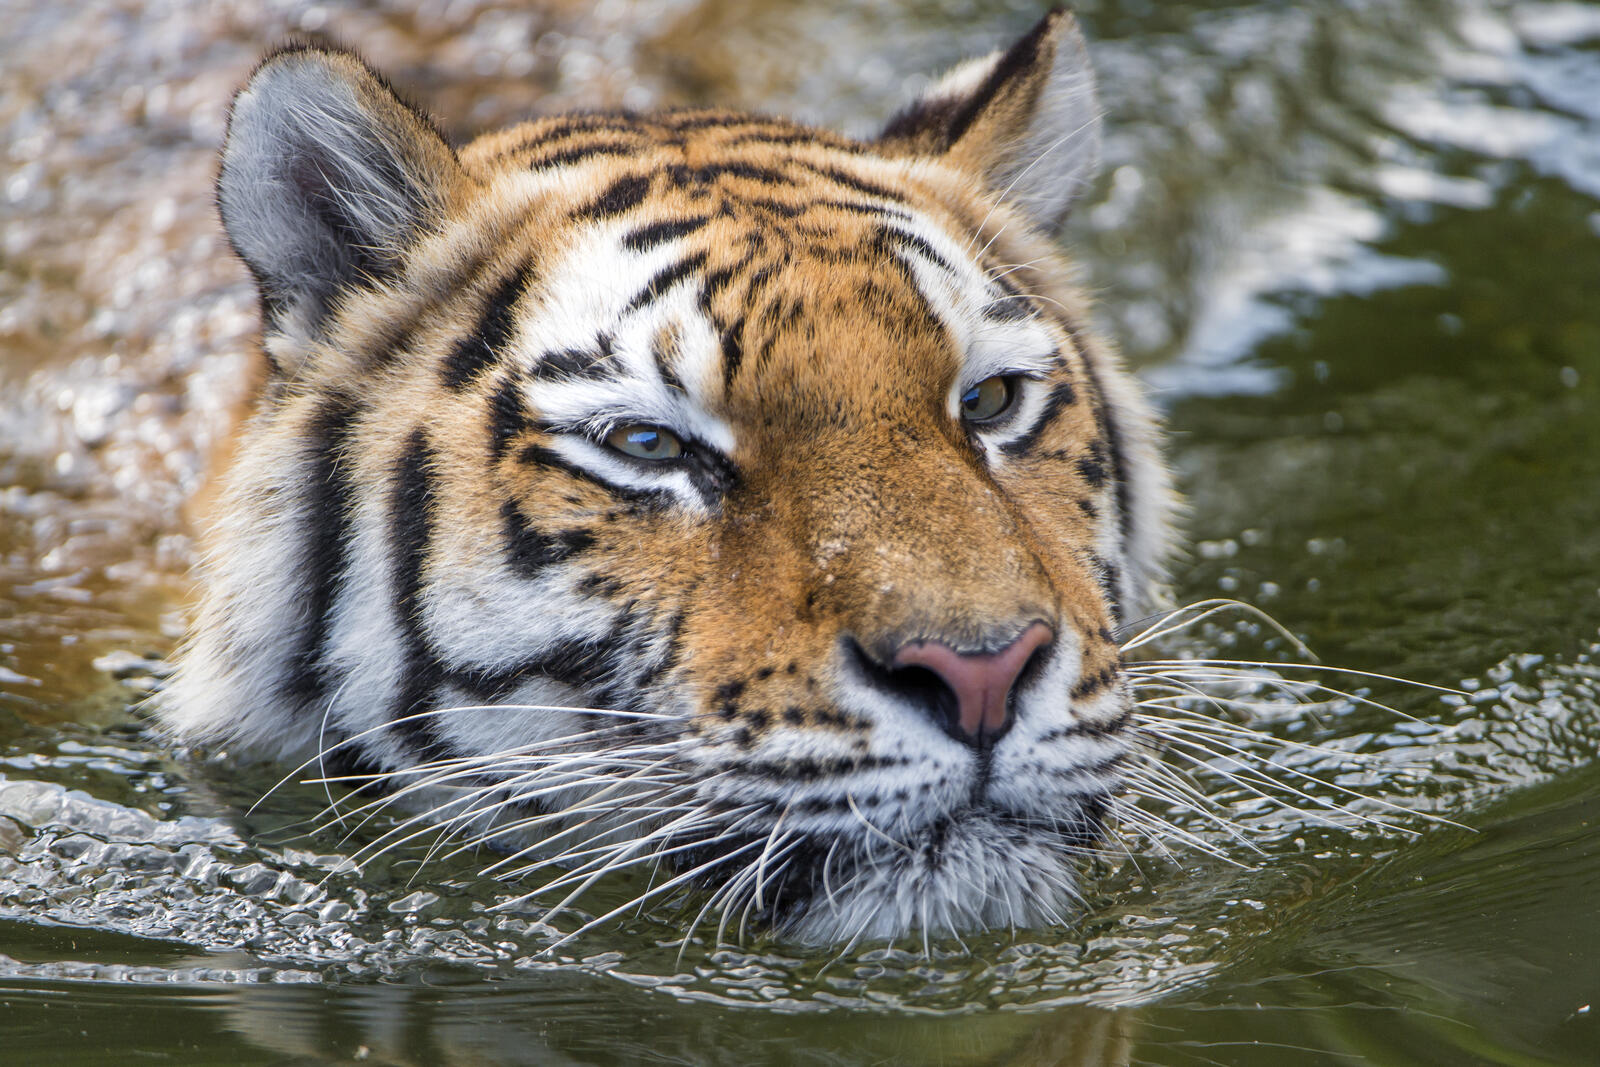 Wallpapers face predator tiger tigers on the desktop